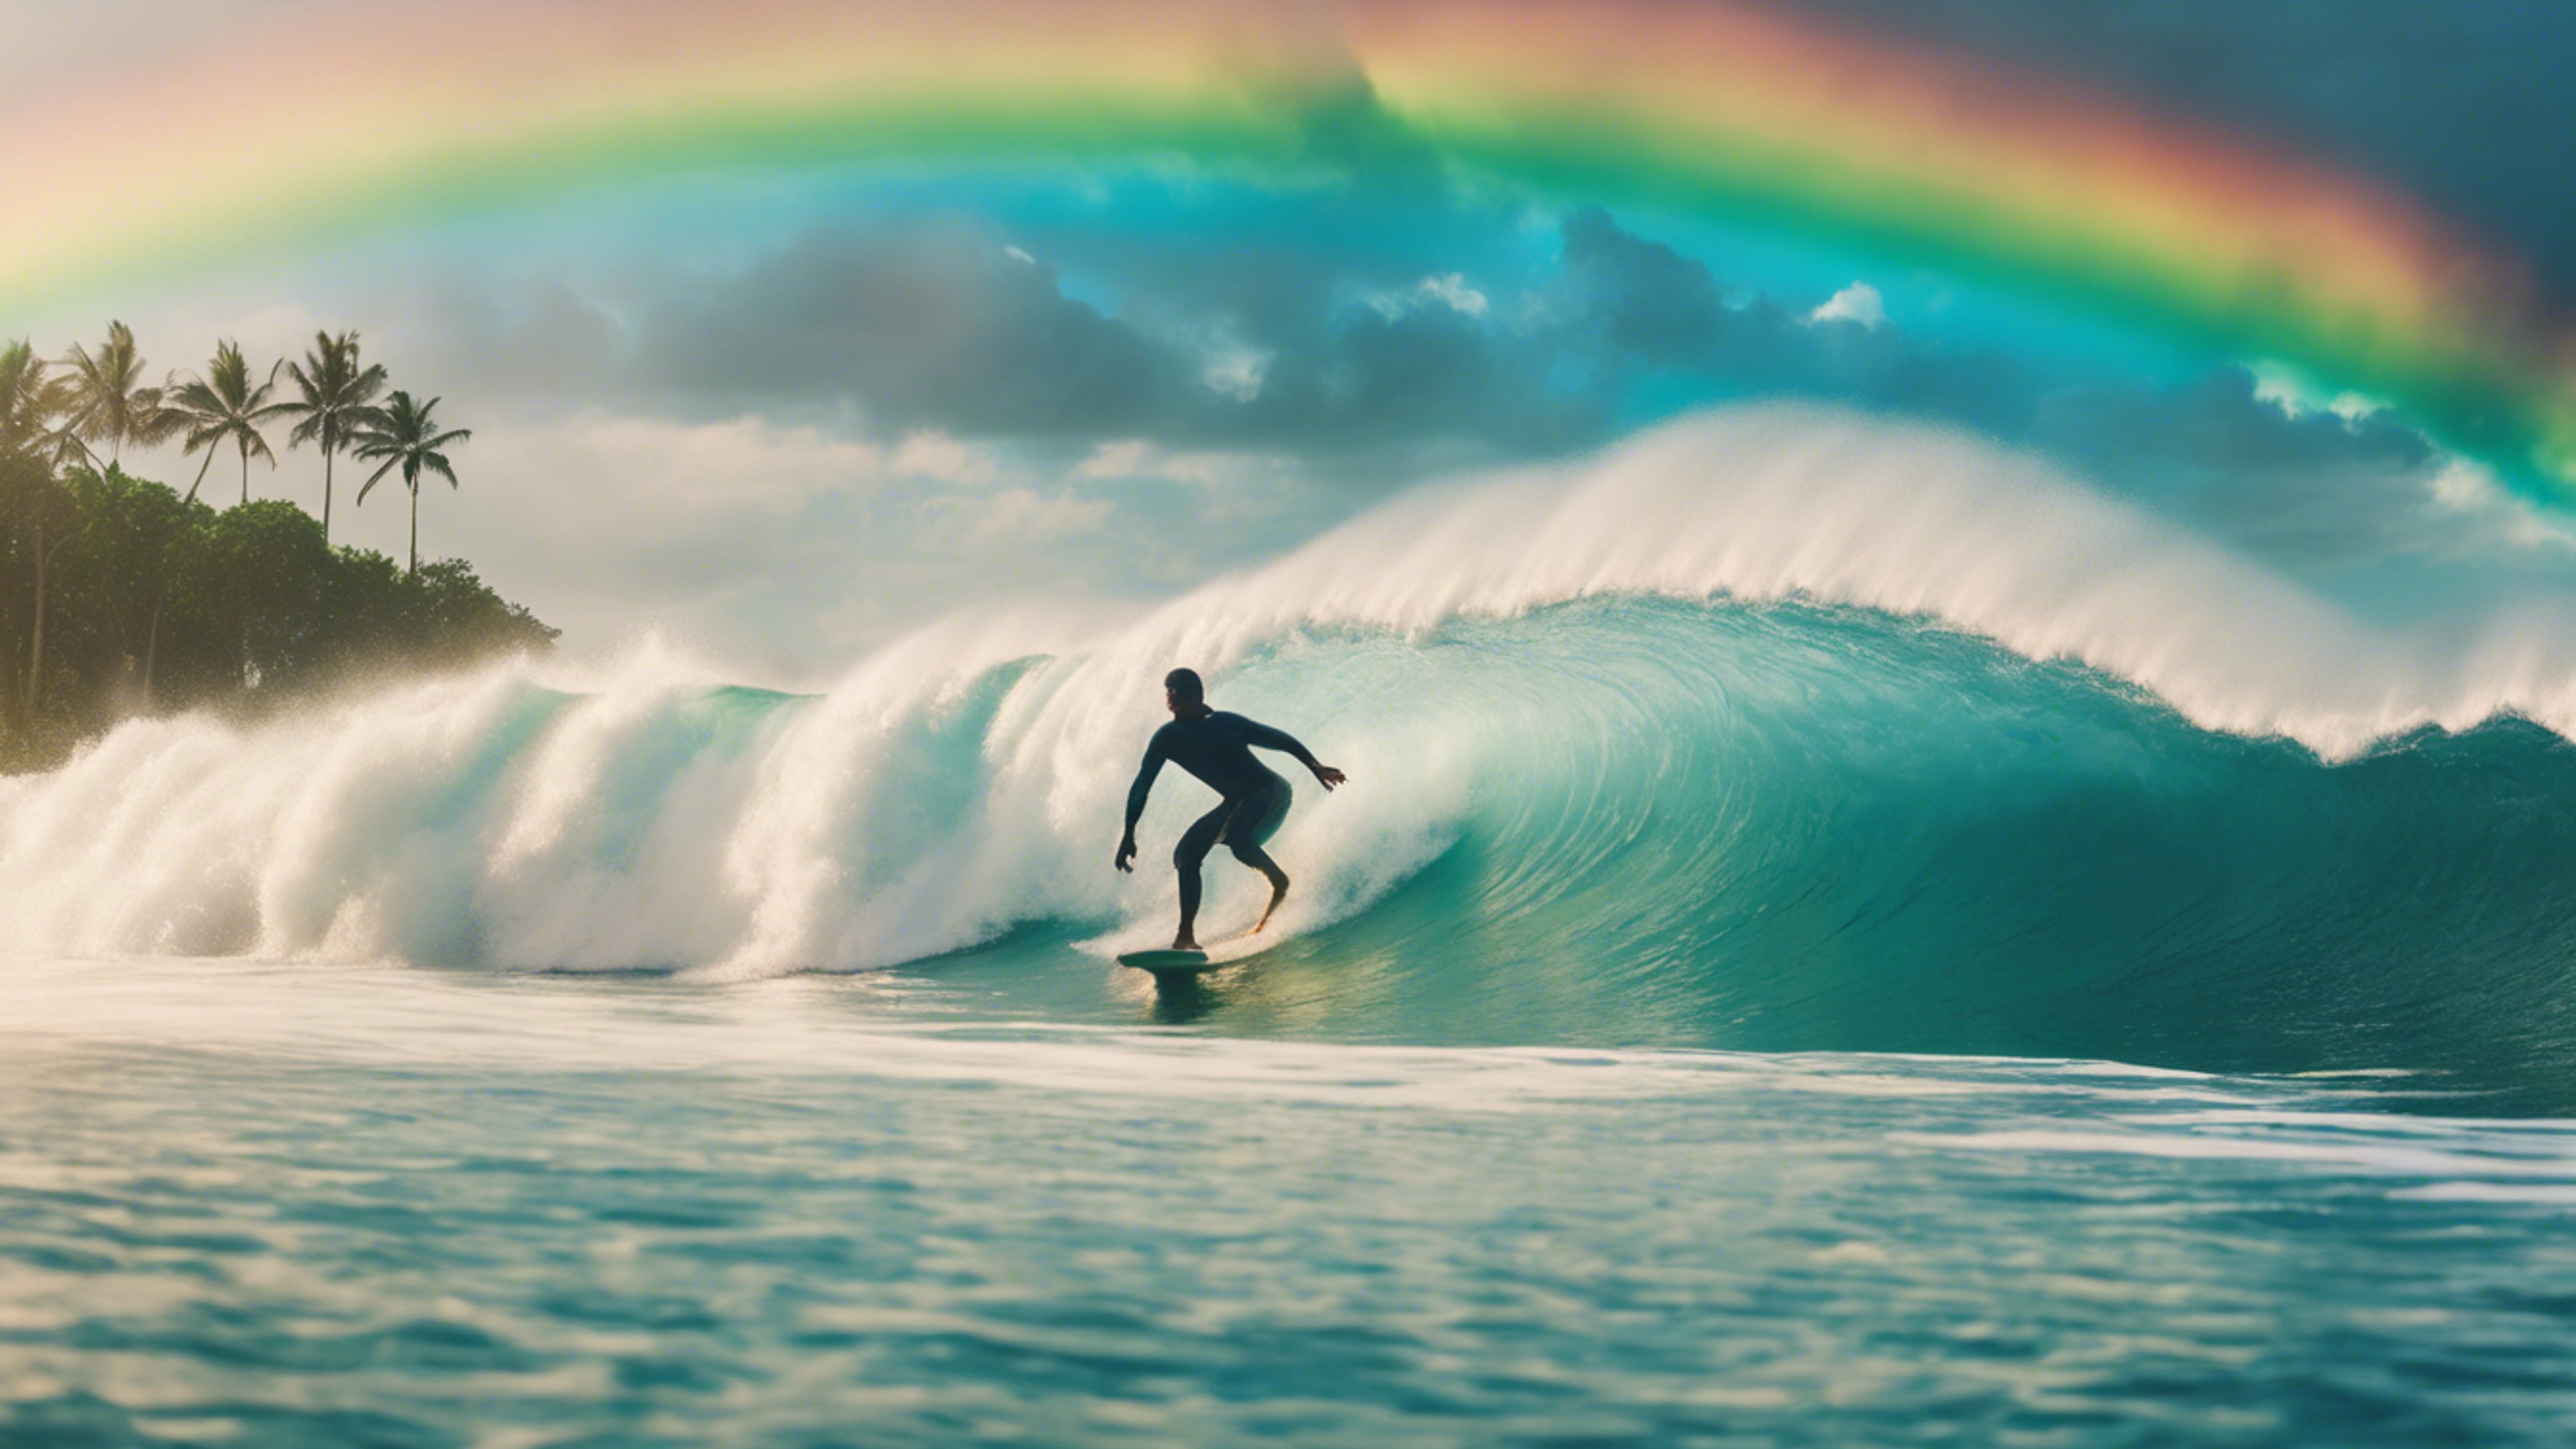 A spontaneous man surfing on a giant wave under a scintillating rainbow in a tropical ocean. Tapeta na zeď[41deec9b24da40d39c6d]